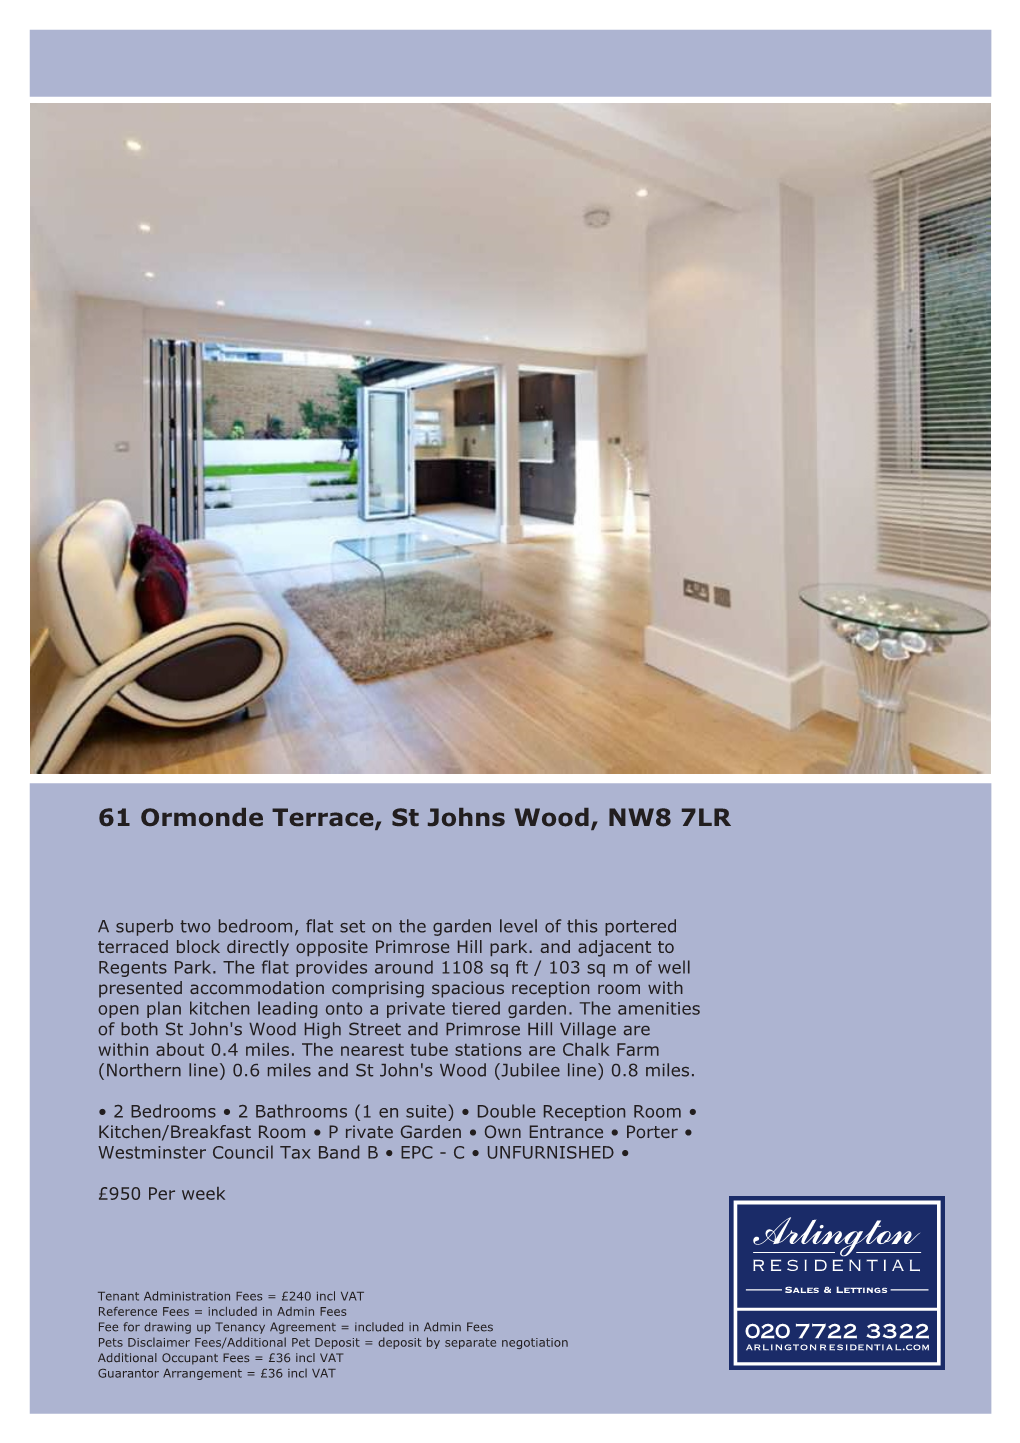 61 Ormonde Terrace, St Johns Wood, NW8 7LR